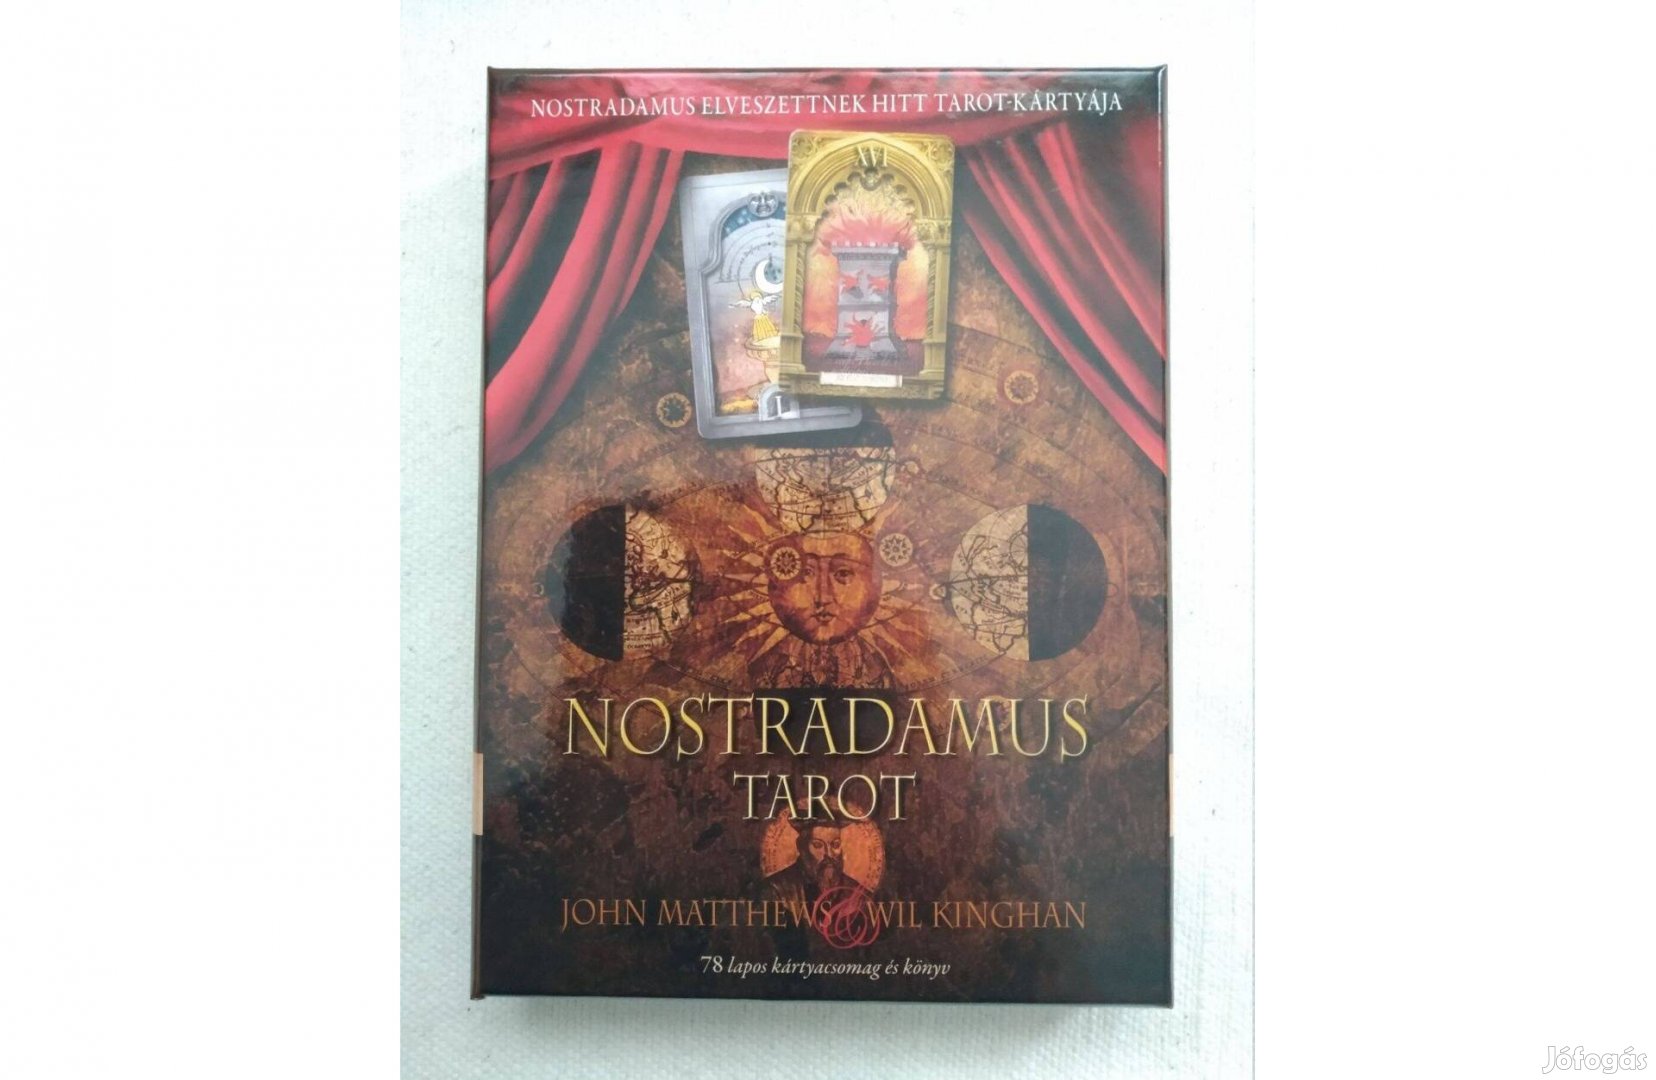 Nostradamus tarot - Nostradamus elveszettnek hitt tarot kártyája